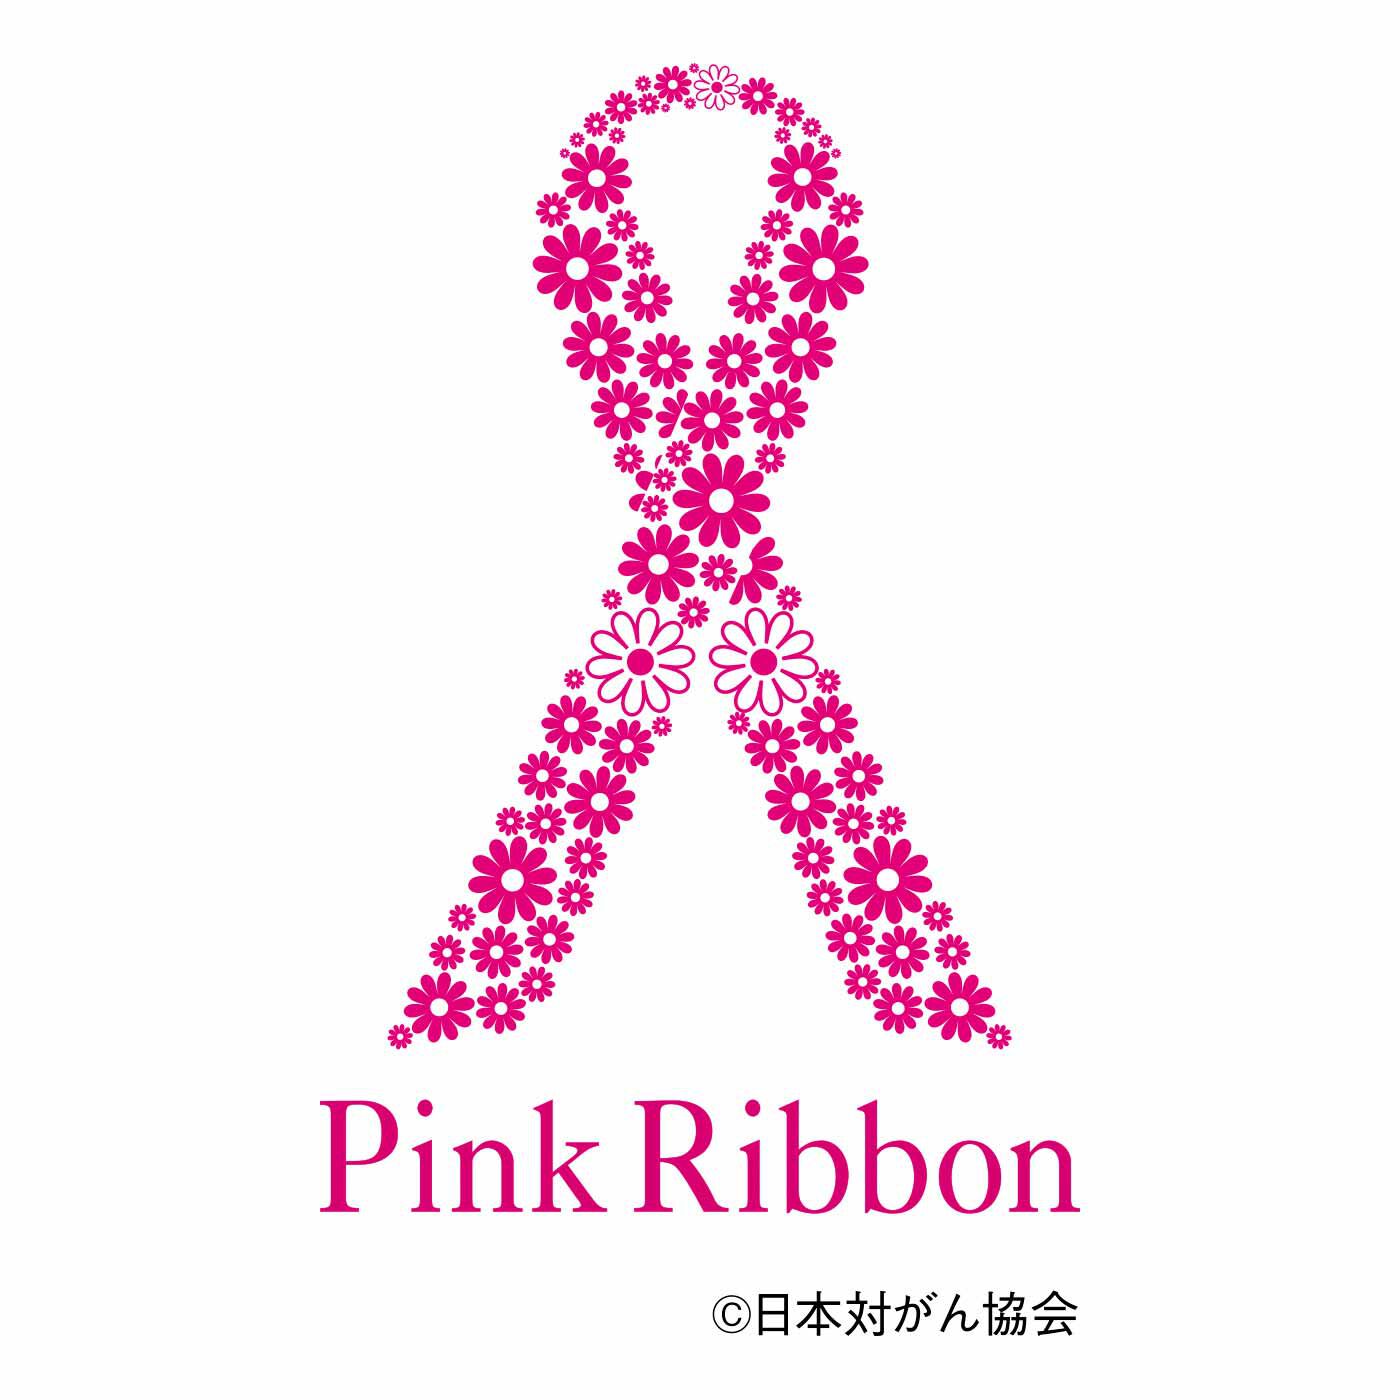 flufeel|ピンクリボン×すべての女性へ 前向きな気持ちを応援する フロントオープンブラの会|ピンクリボン基金付き。購入すると日本対がん協会の乳がんをなくす「ほほえみ基金」に寄付され、乳がんの早期発見のために定期的な検診受診をすすめる、ピンクリボンの活動を応援することができます。